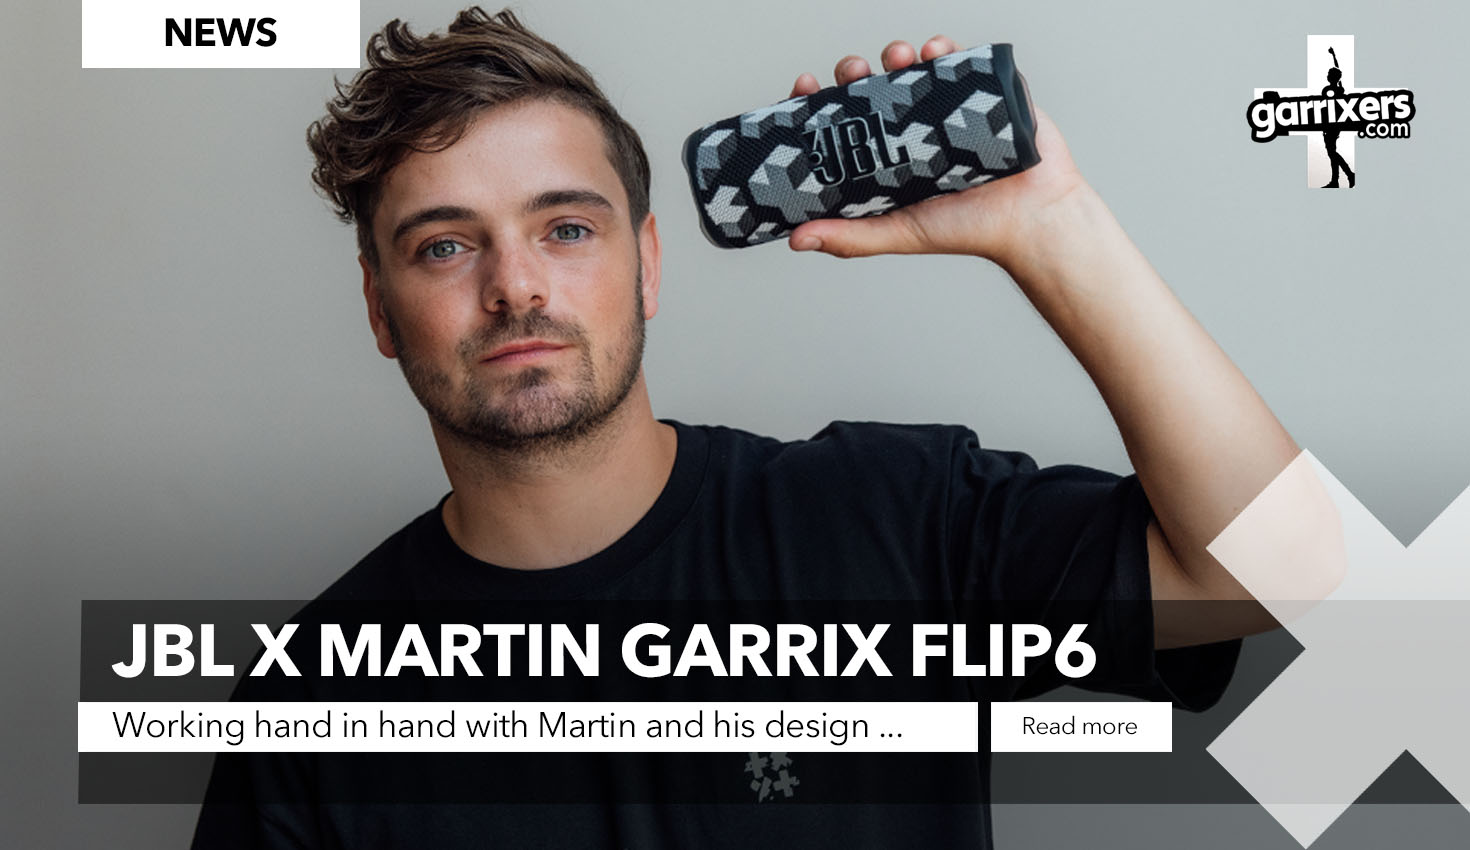 Martin Garrix x JBL - Flip6 on garrixers.com